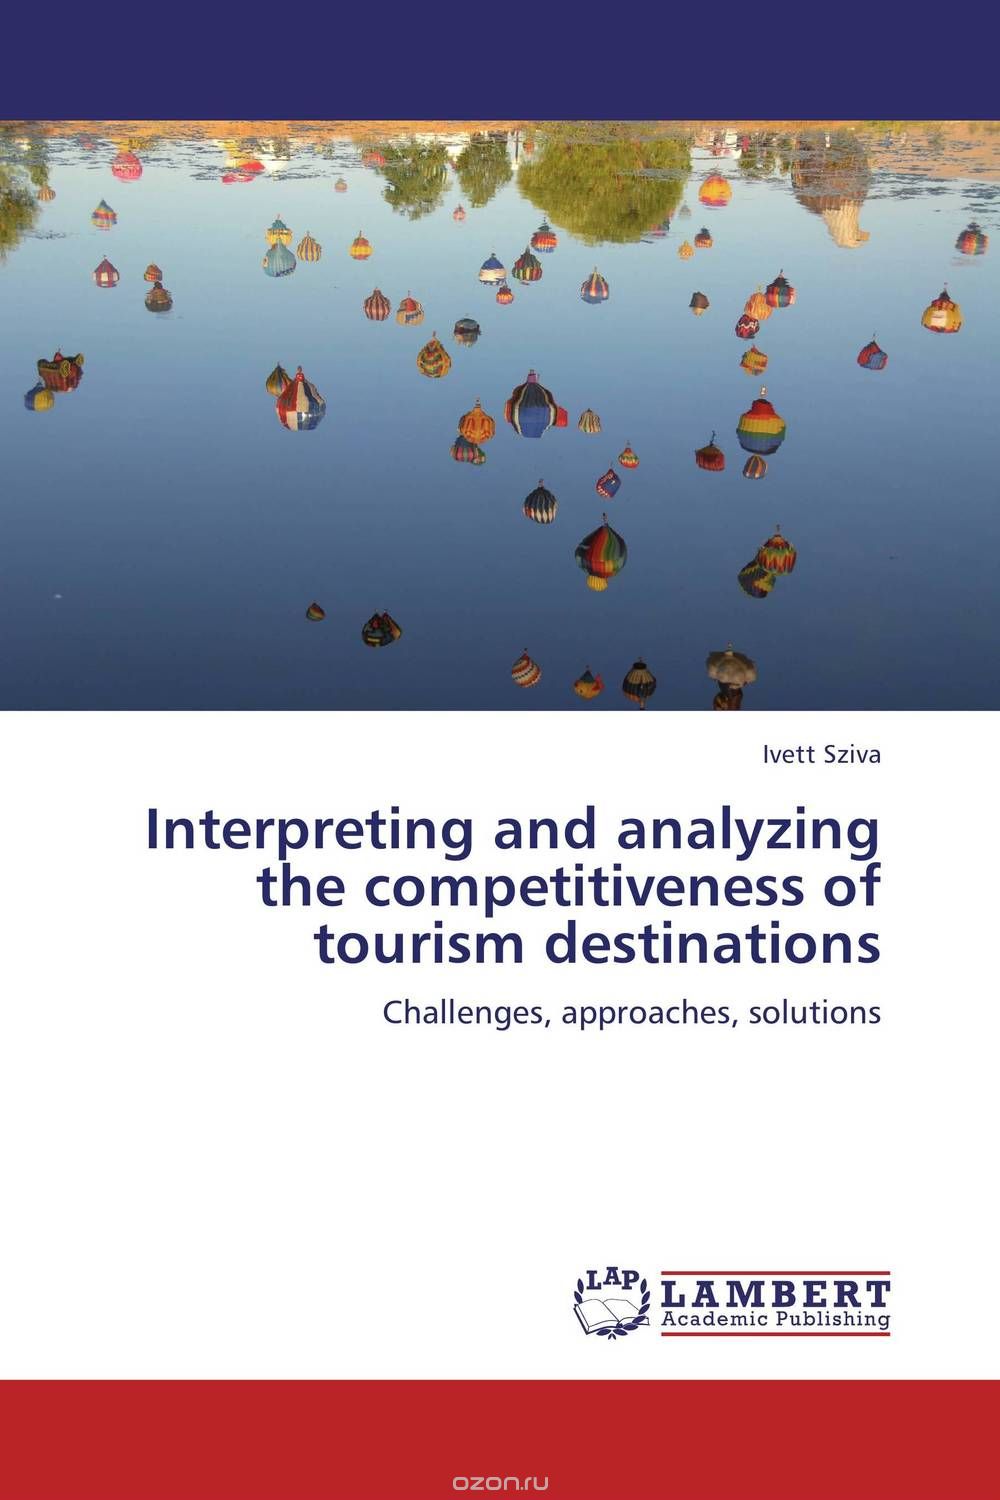 Скачать книгу "Interpreting and analyzing the competitiveness of tourism destinations"